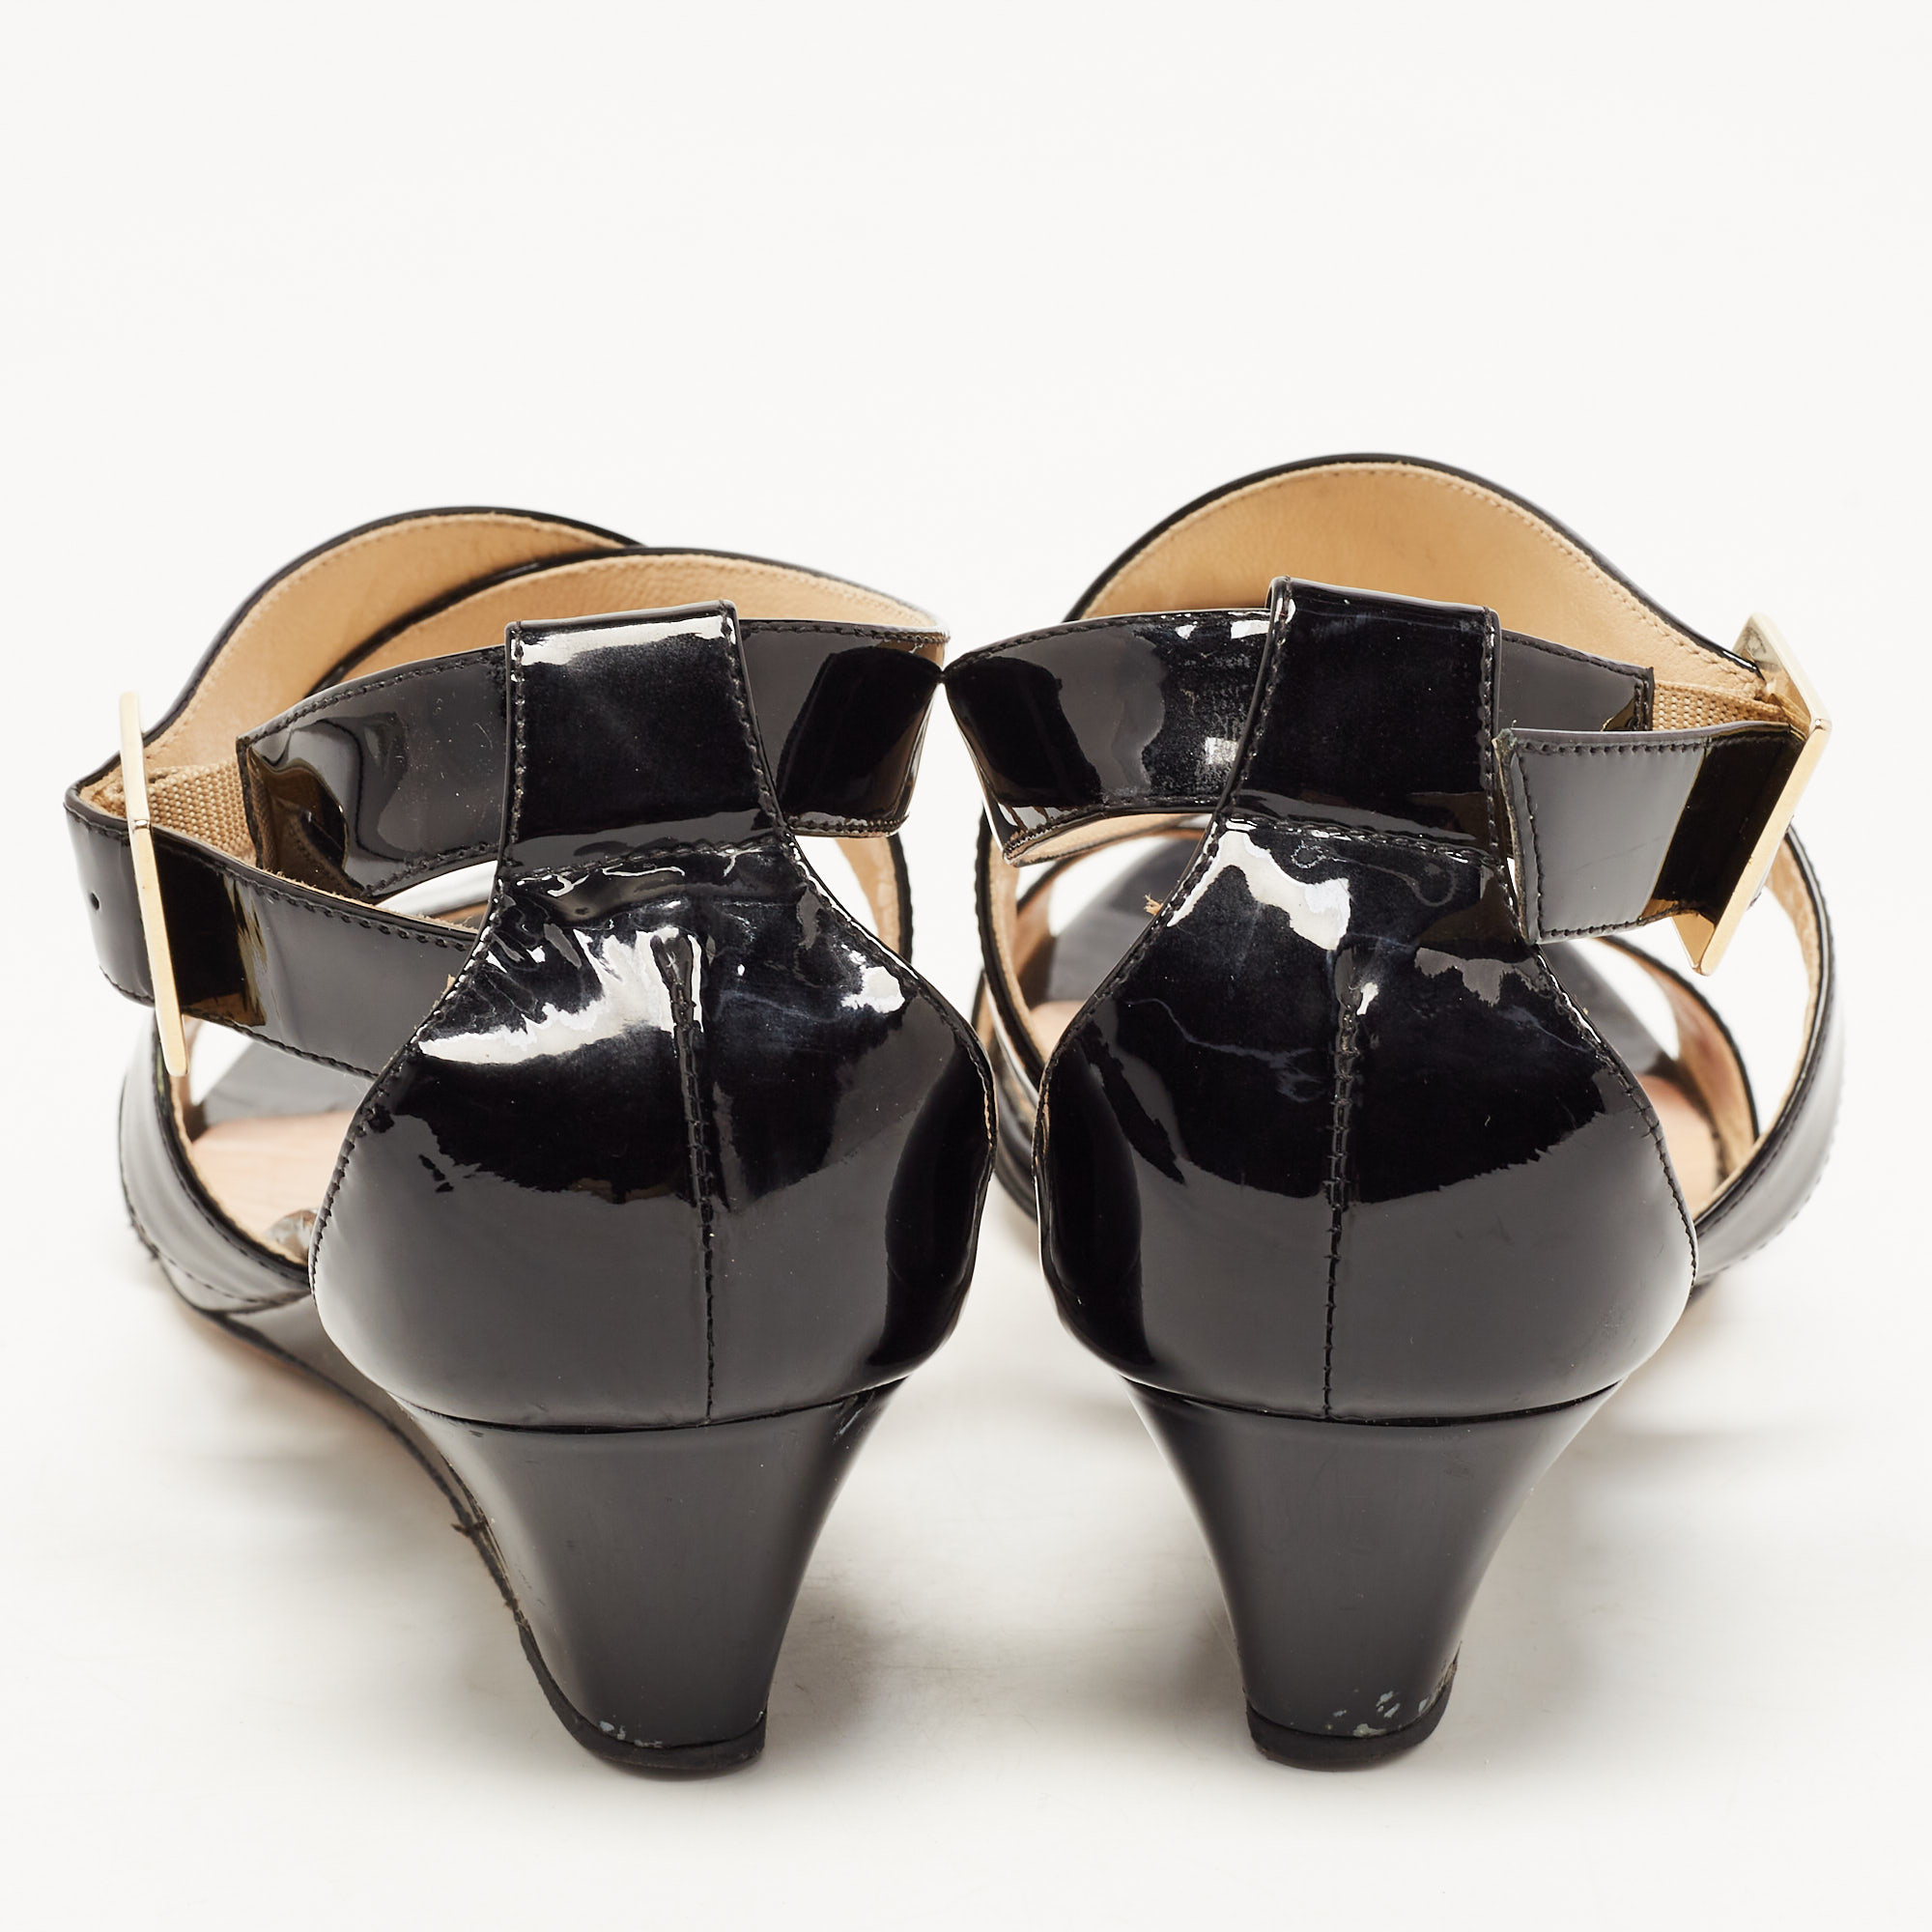 Jimmy Choo Black Patent Leather Cross Strap Slingback Sandals Size 35